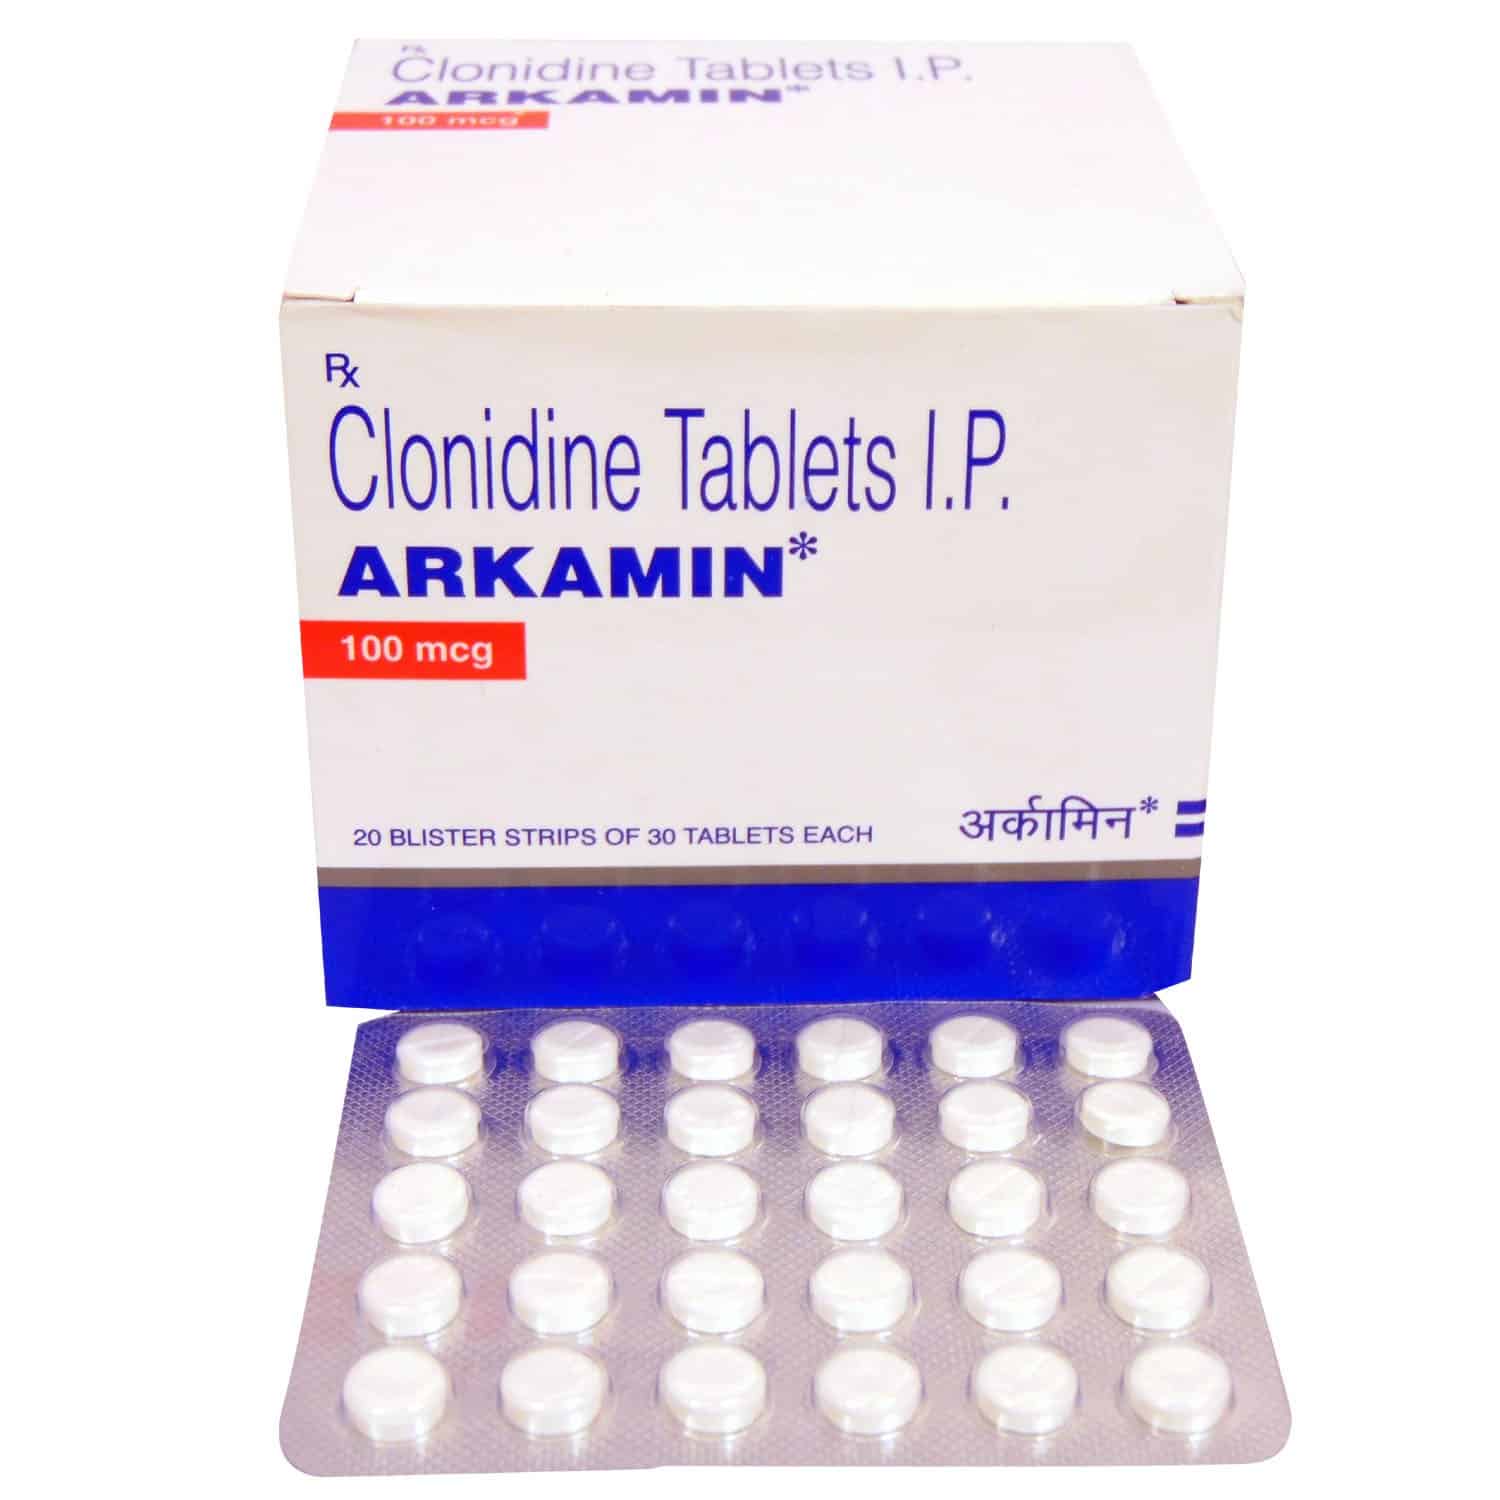 Clonidine 100mg Arkamin Tablet, Torrent Pharmaceuticals Ltd, Packaging ...